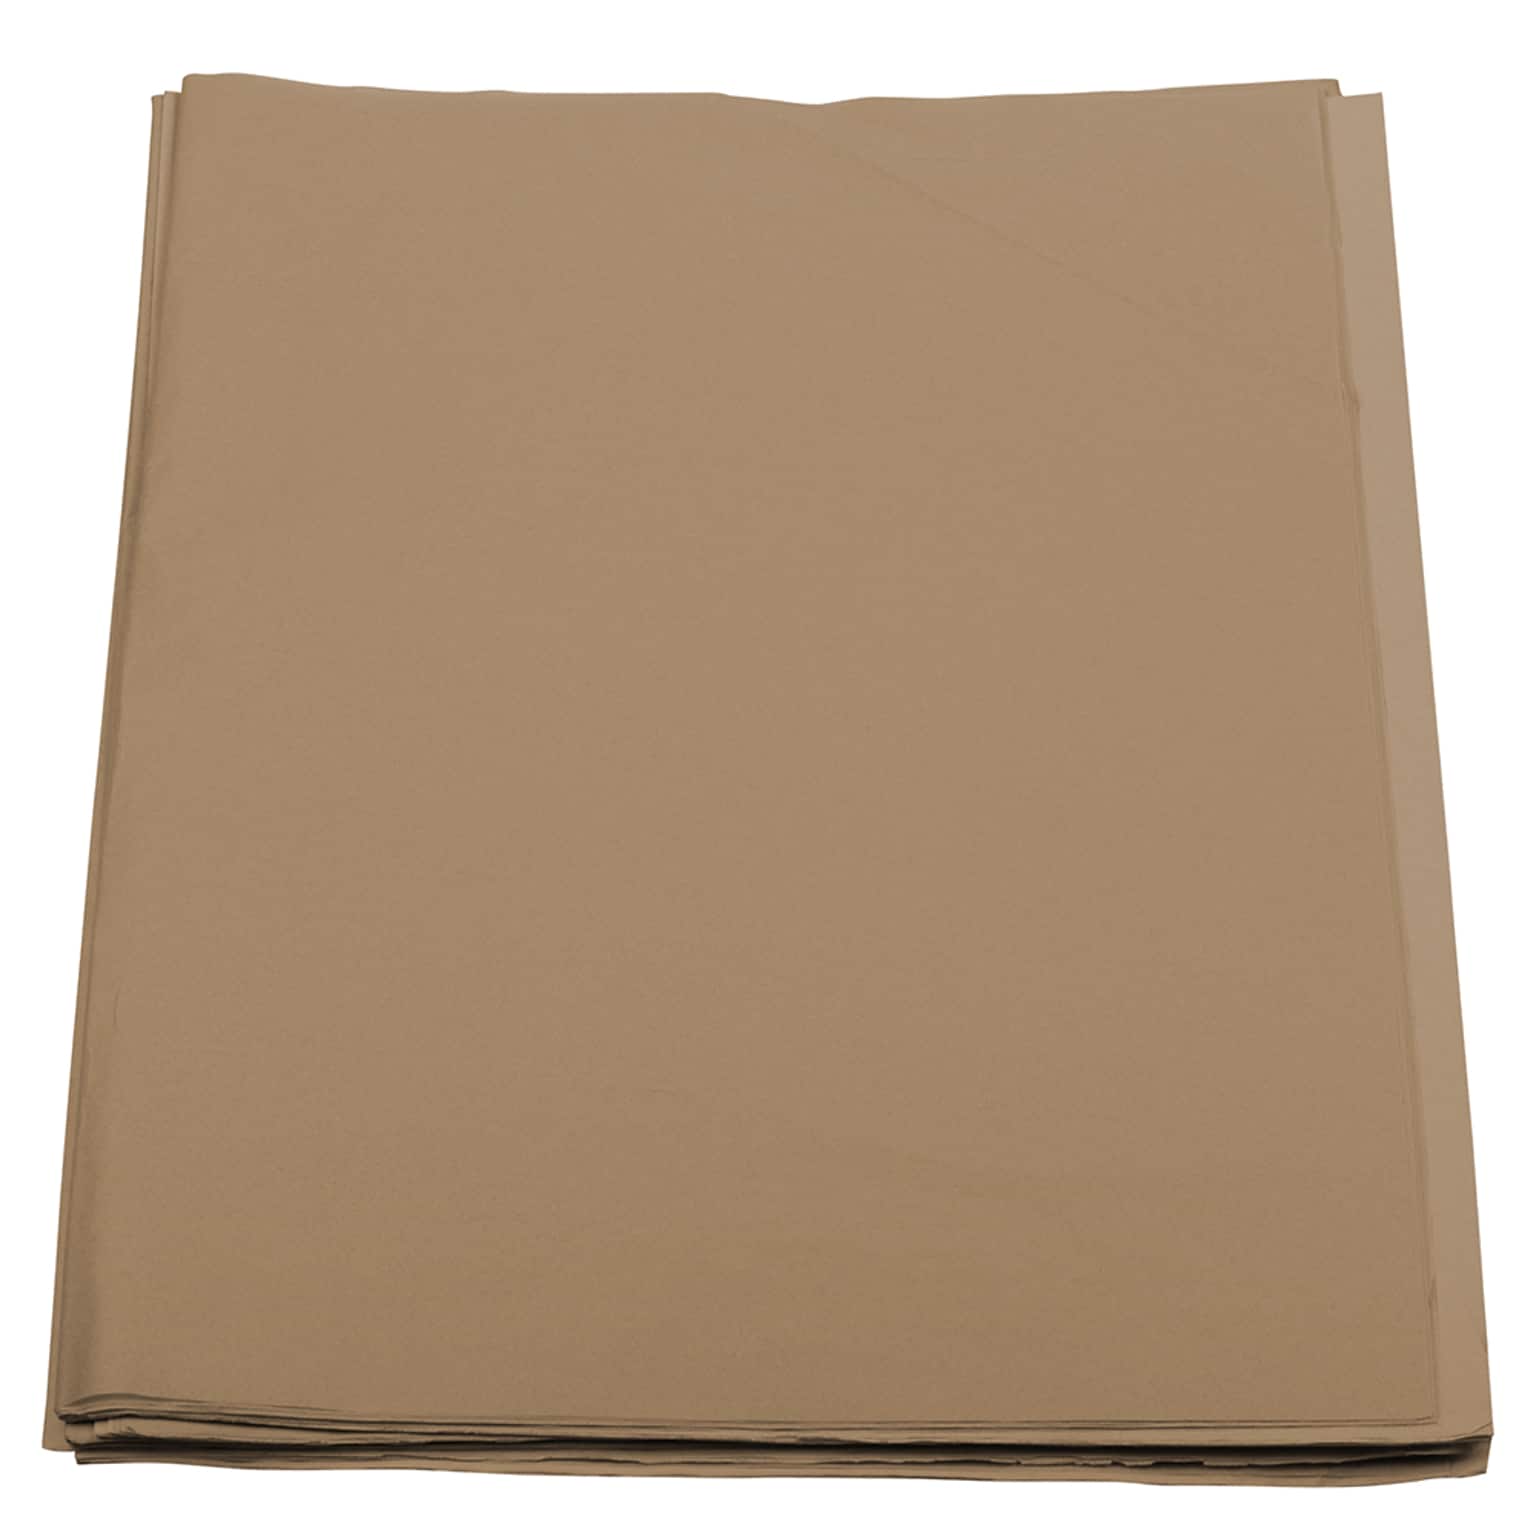 JAM PAPER Tissue Paper, Tan, 480 Sheets/Ream